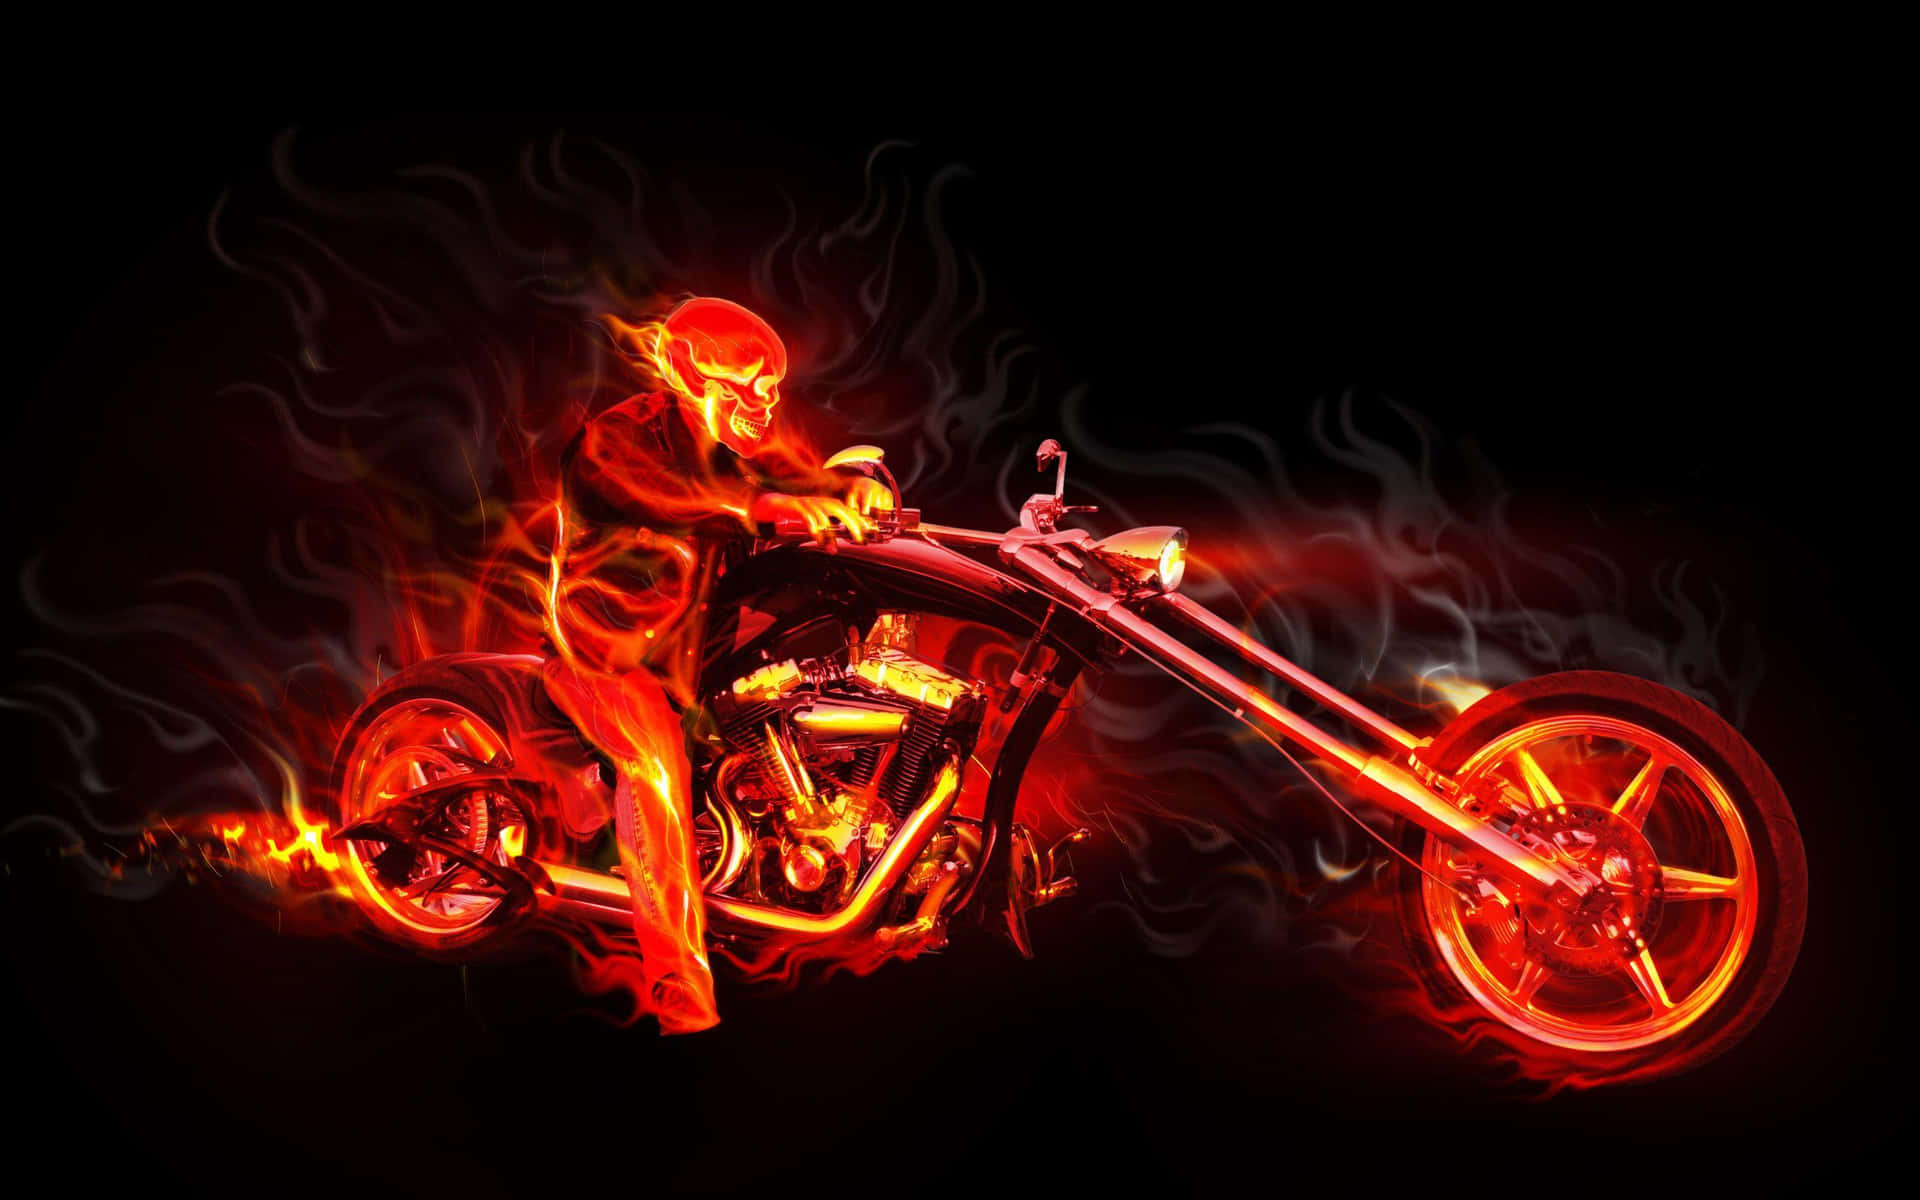 Radiant 3D Fire in Abstract Art Illustration Wallpaper